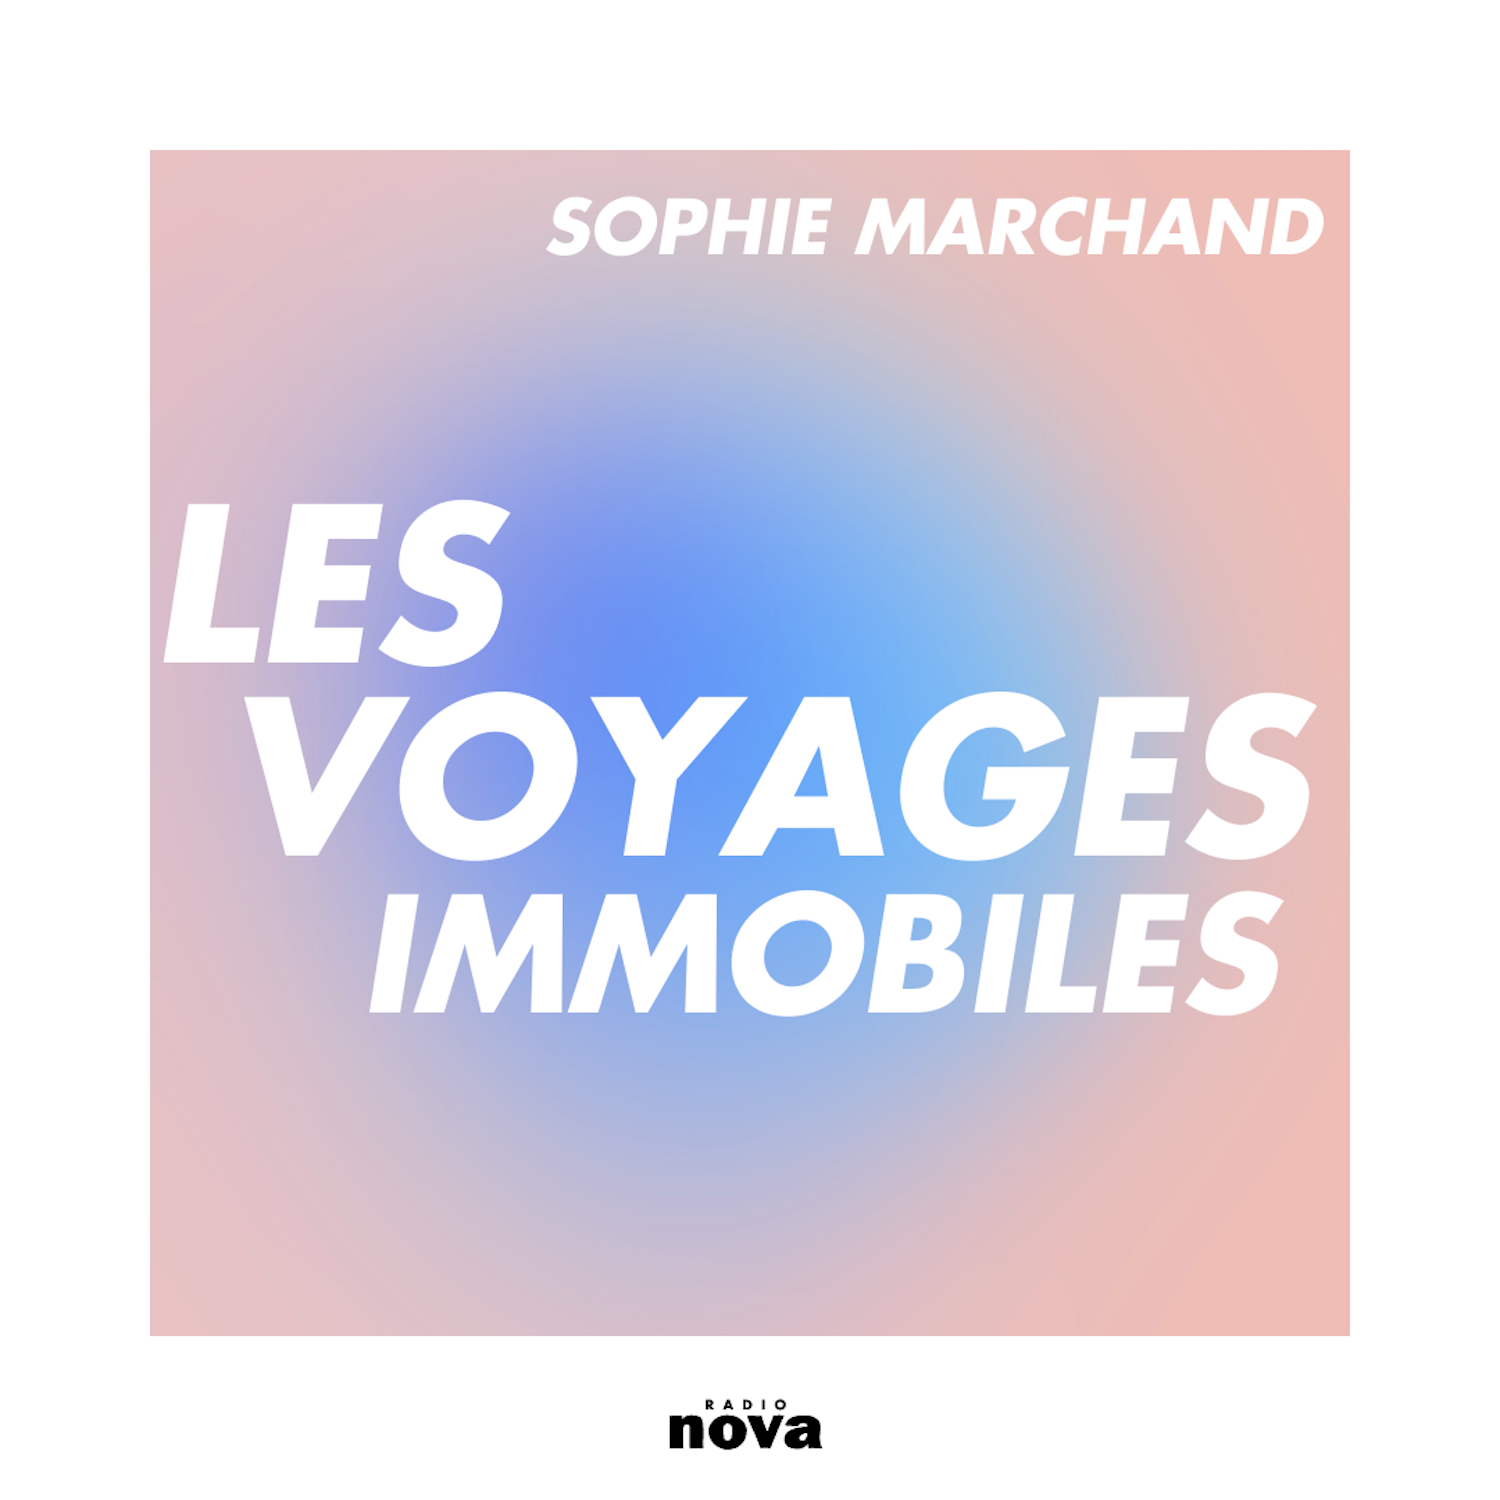 Les Voyages immobiles - Radio Nova